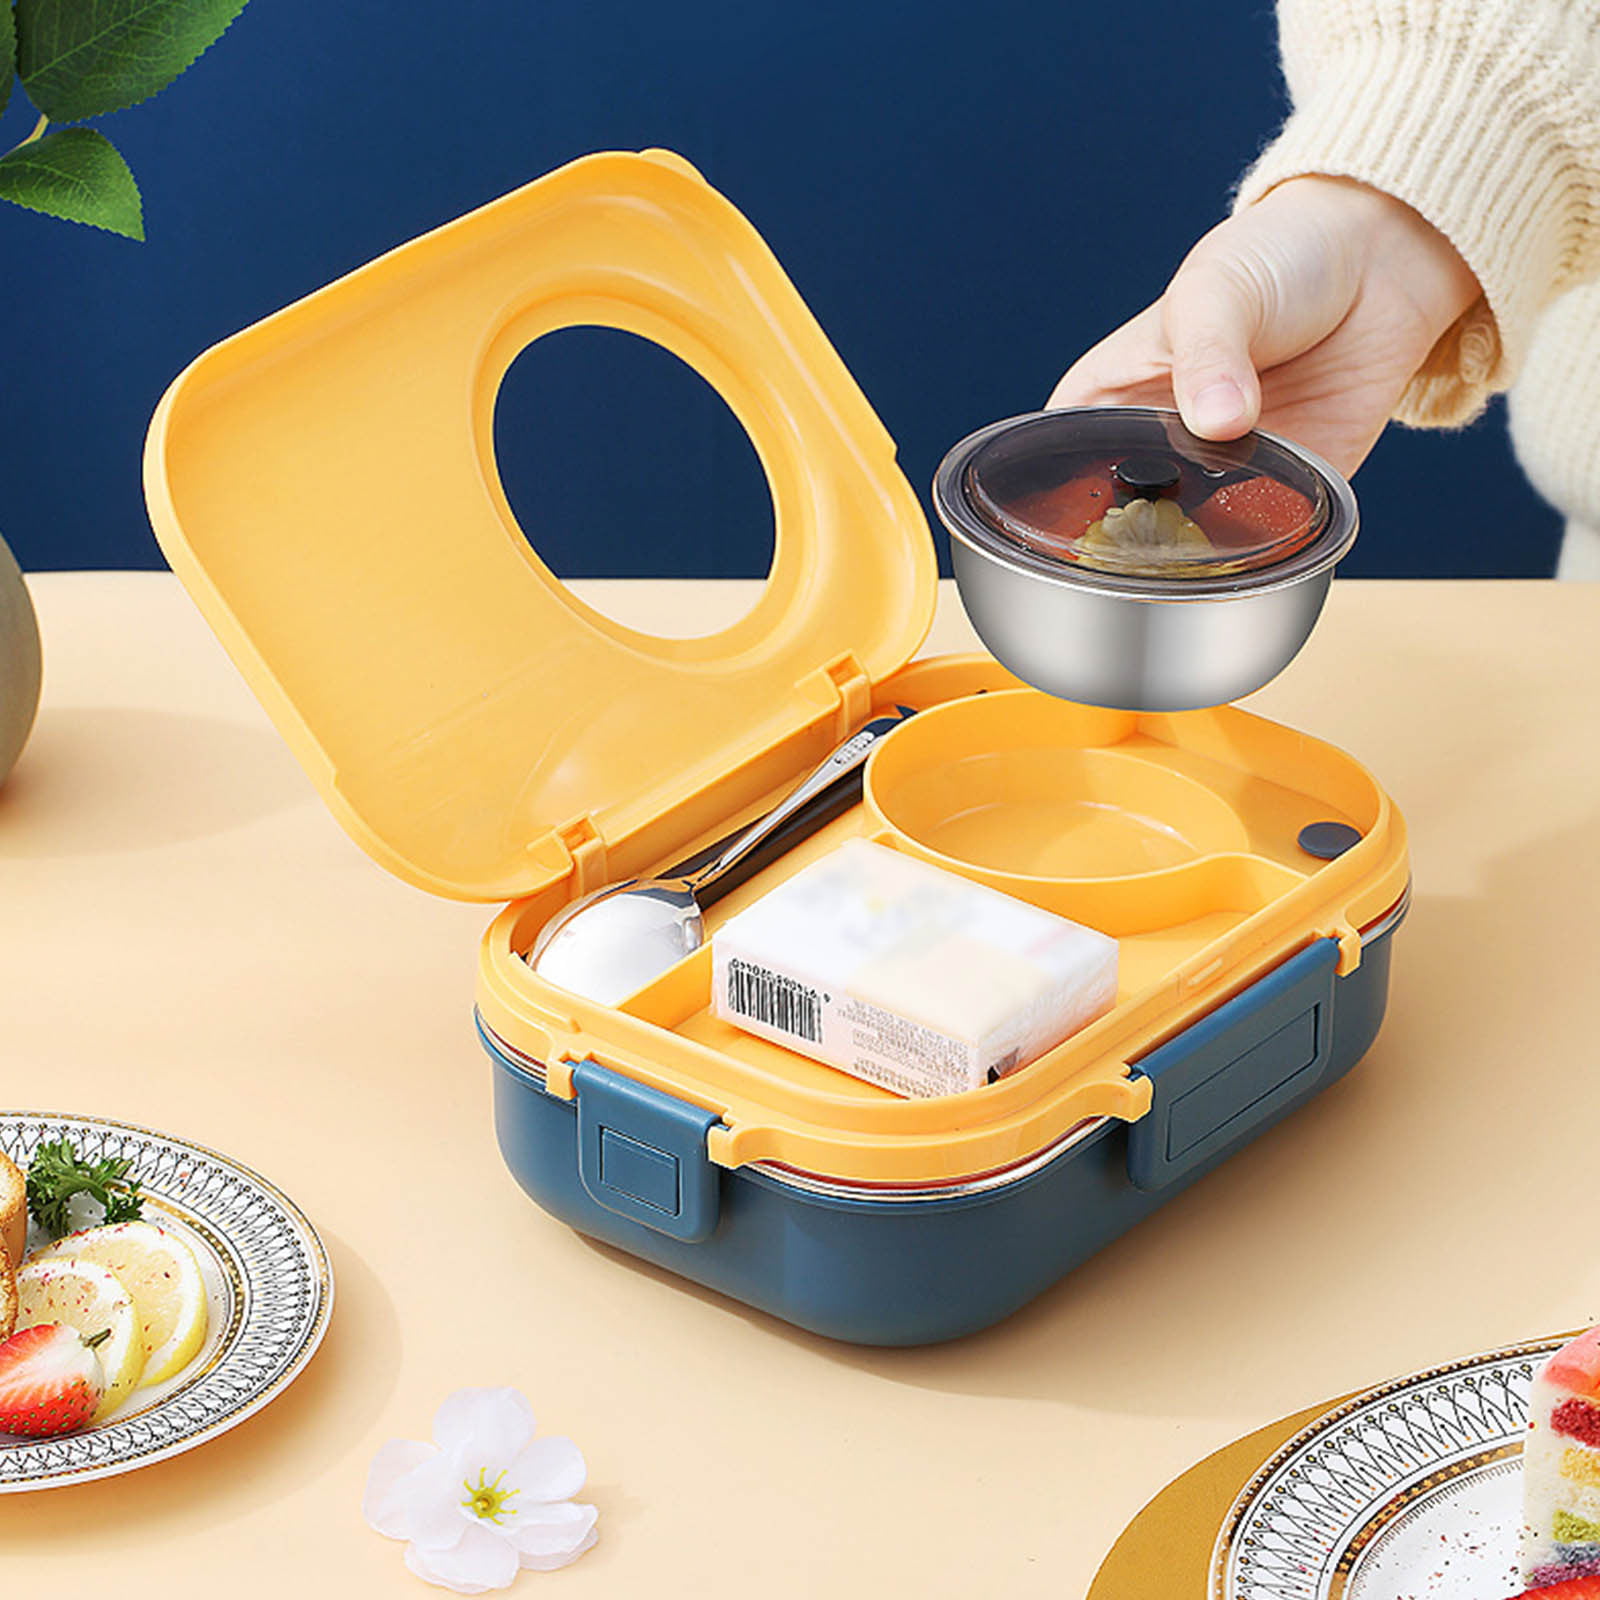 Exclusivo Bolsillo Foldable Bento Lunch Box (6pcs) for Women Men With Spork  & Lid BPA Free,Collapsib…See more Exclusivo Bolsillo Foldable Bento Lunch